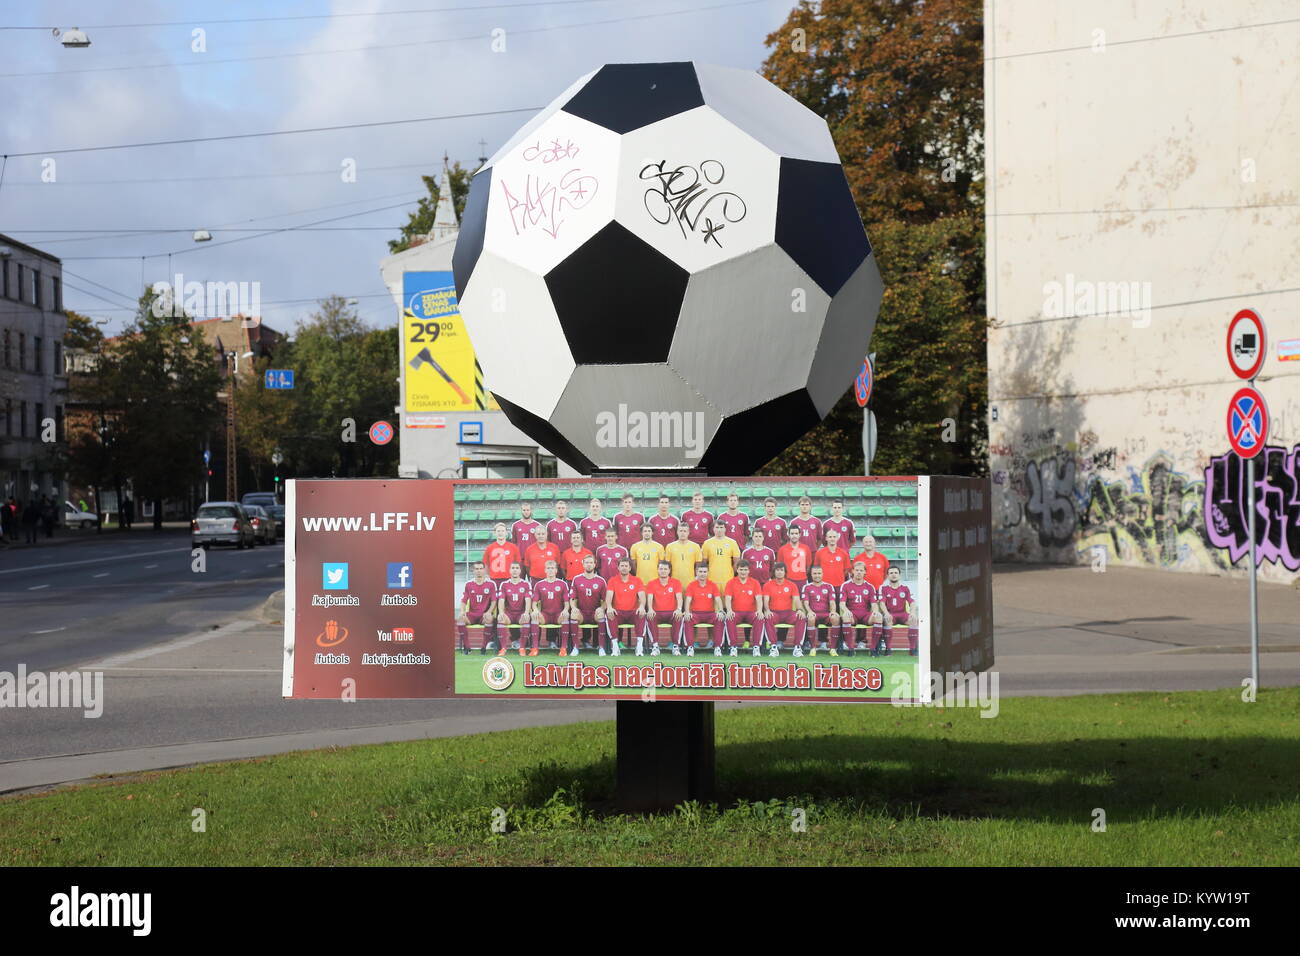 Latvian sport fk jauniba riga hi-res stock photography and images - Alamy